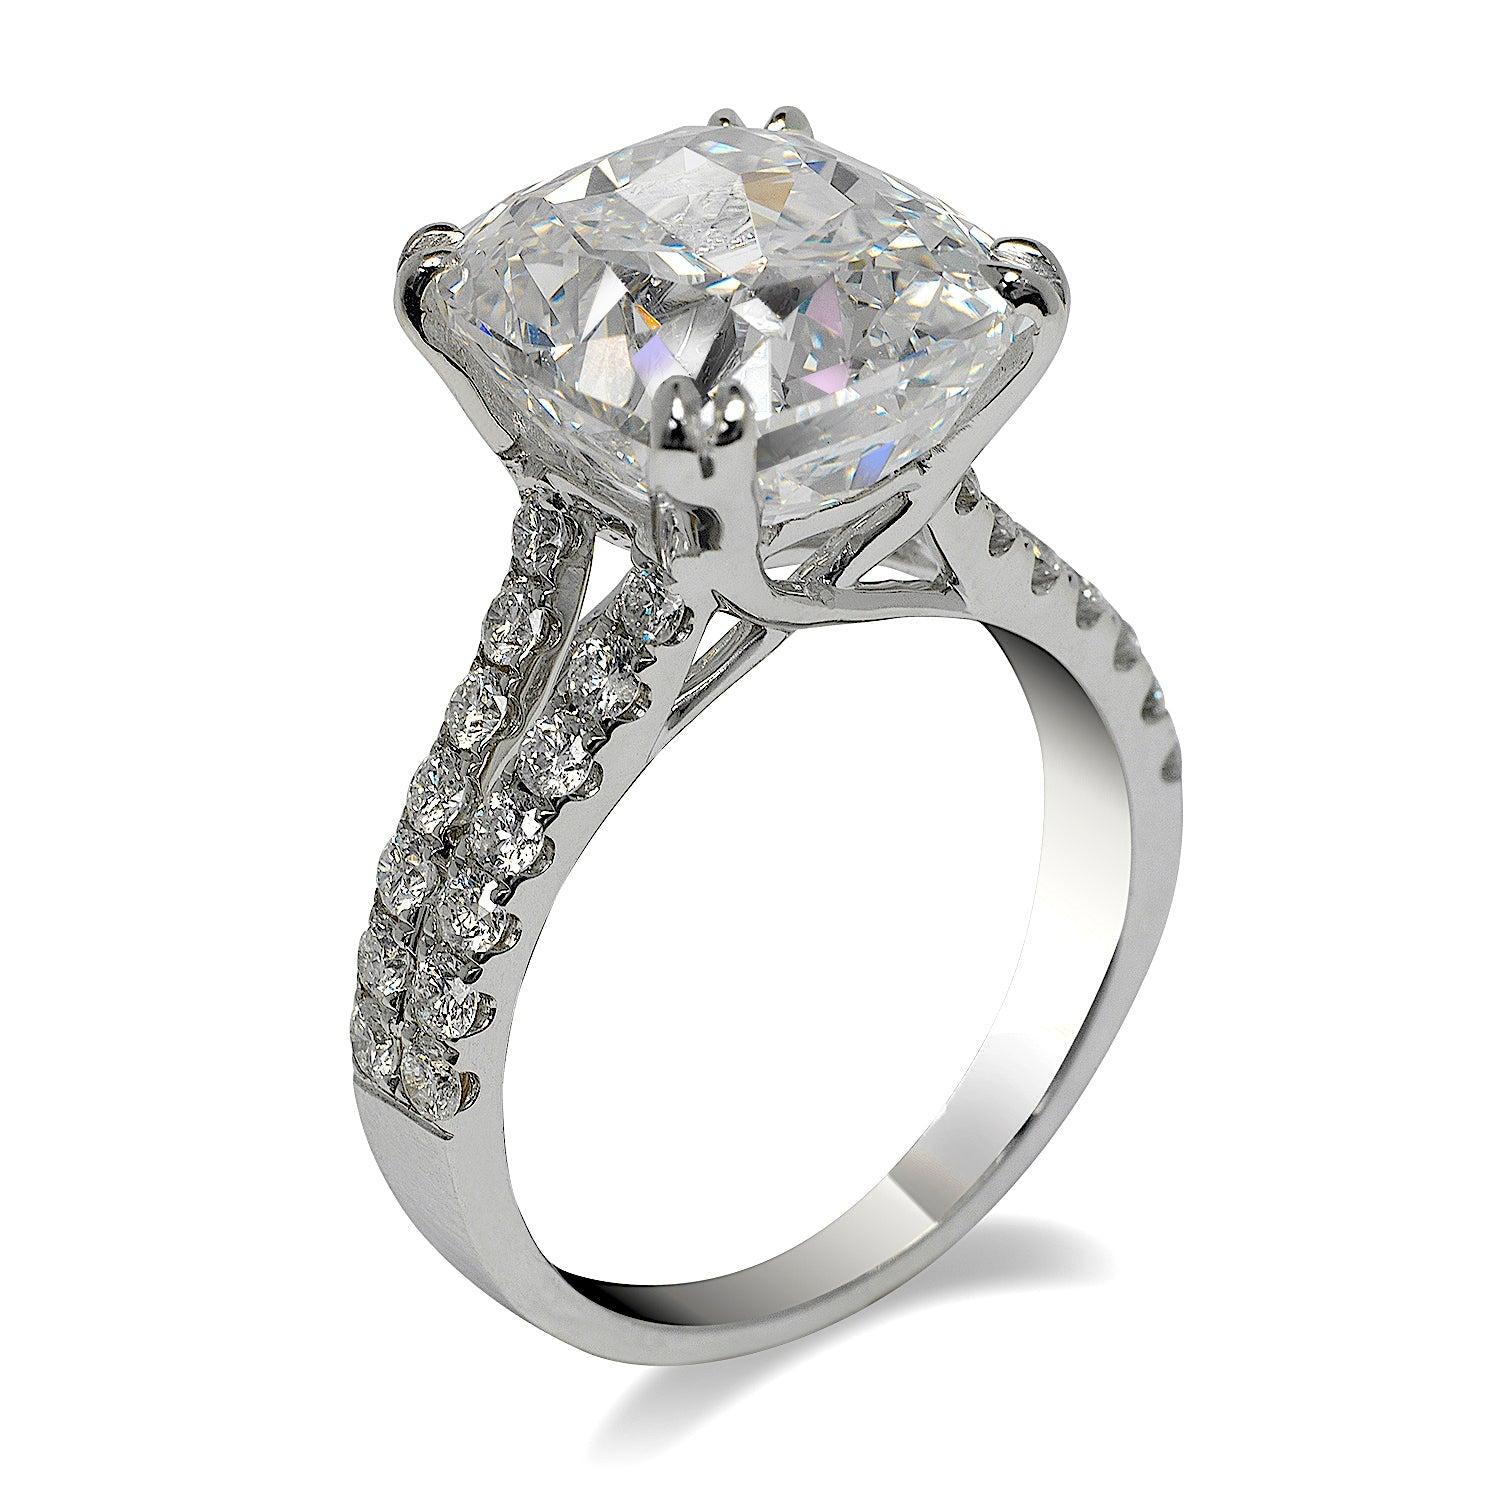 8 carat cushion cut diamond ring